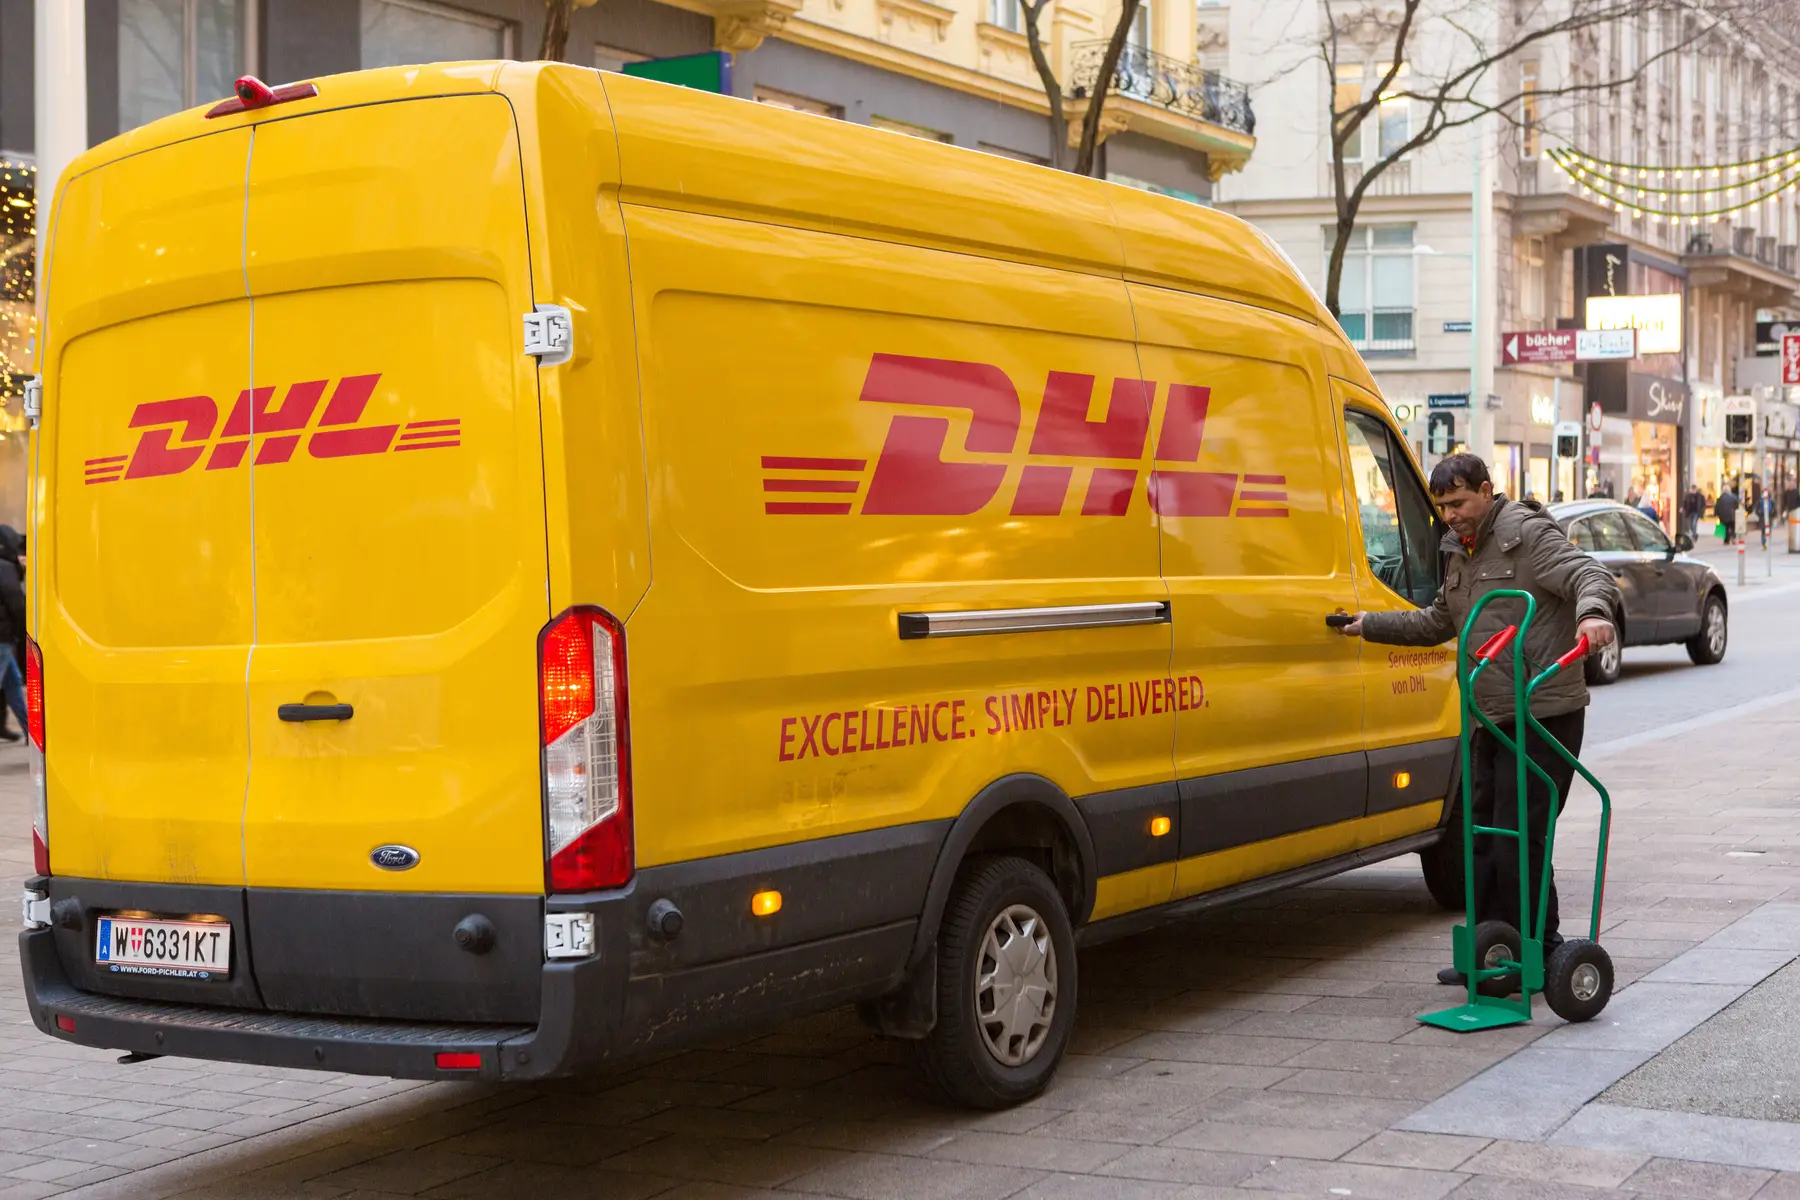 A DHL delivery van in Austria